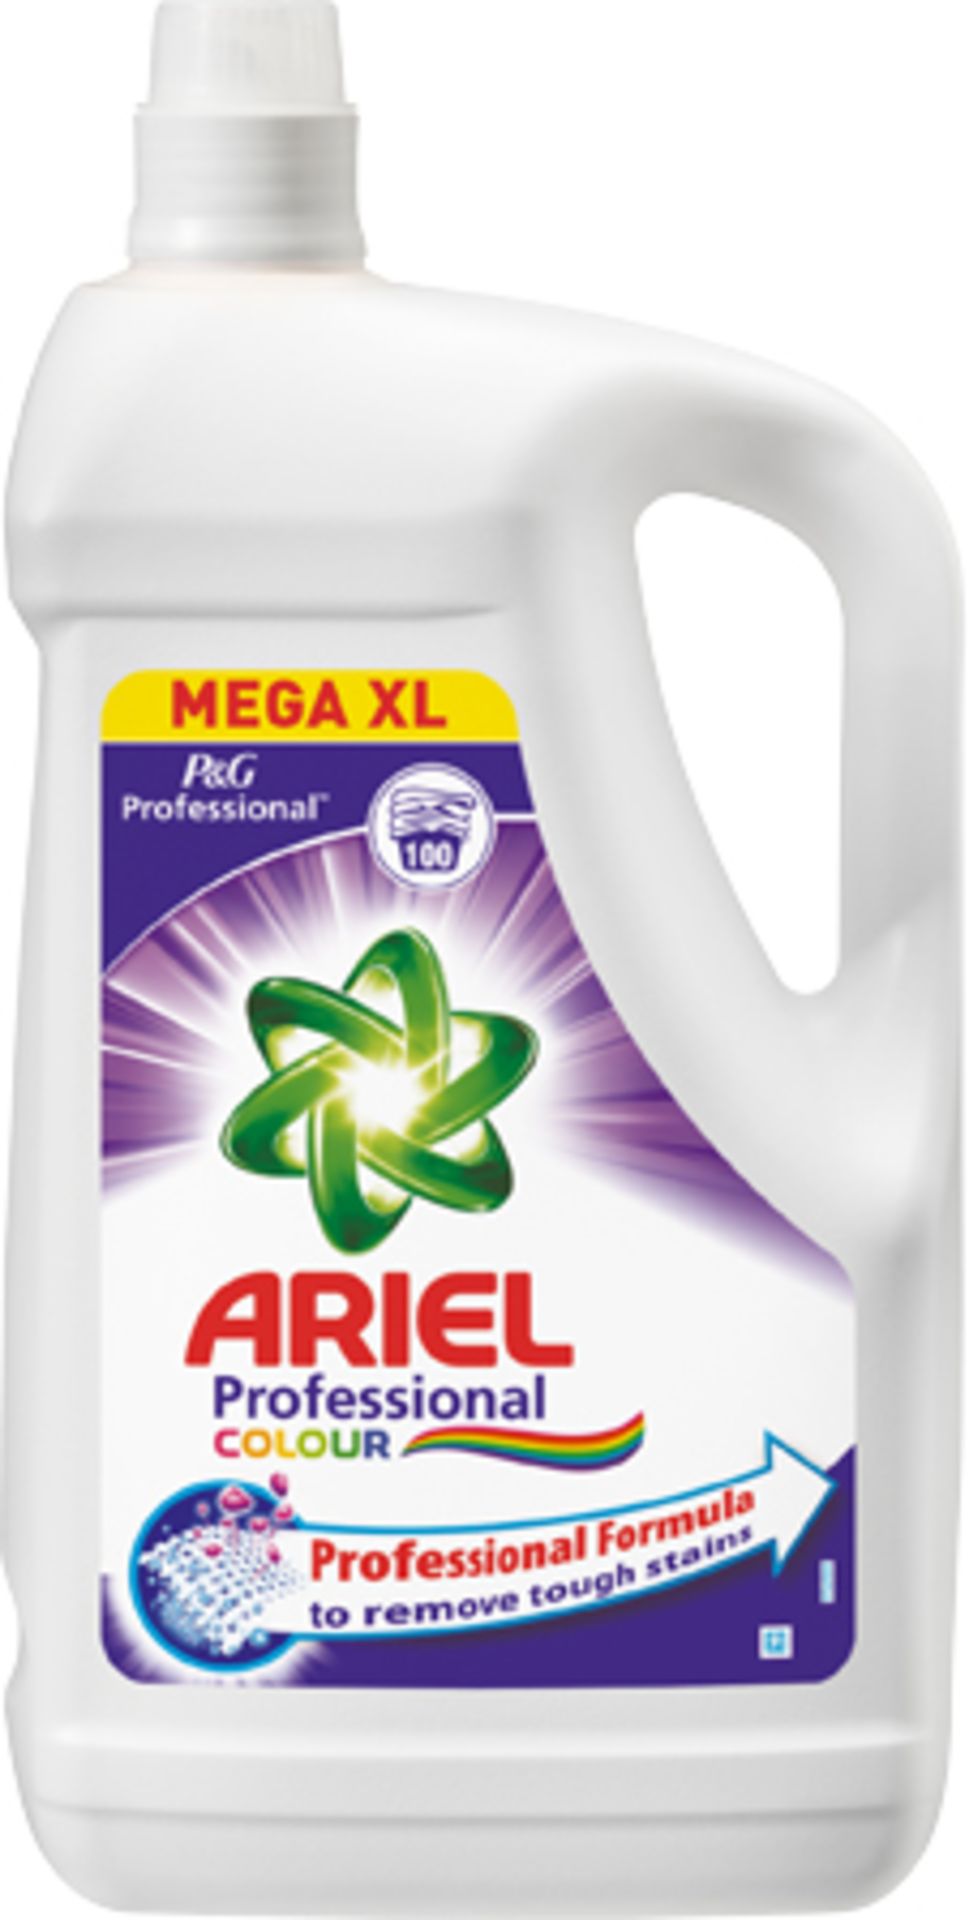 Ariel Professional Liquid Colour 5L x 10, Postage available by ParcelForce Express 48 £19.99